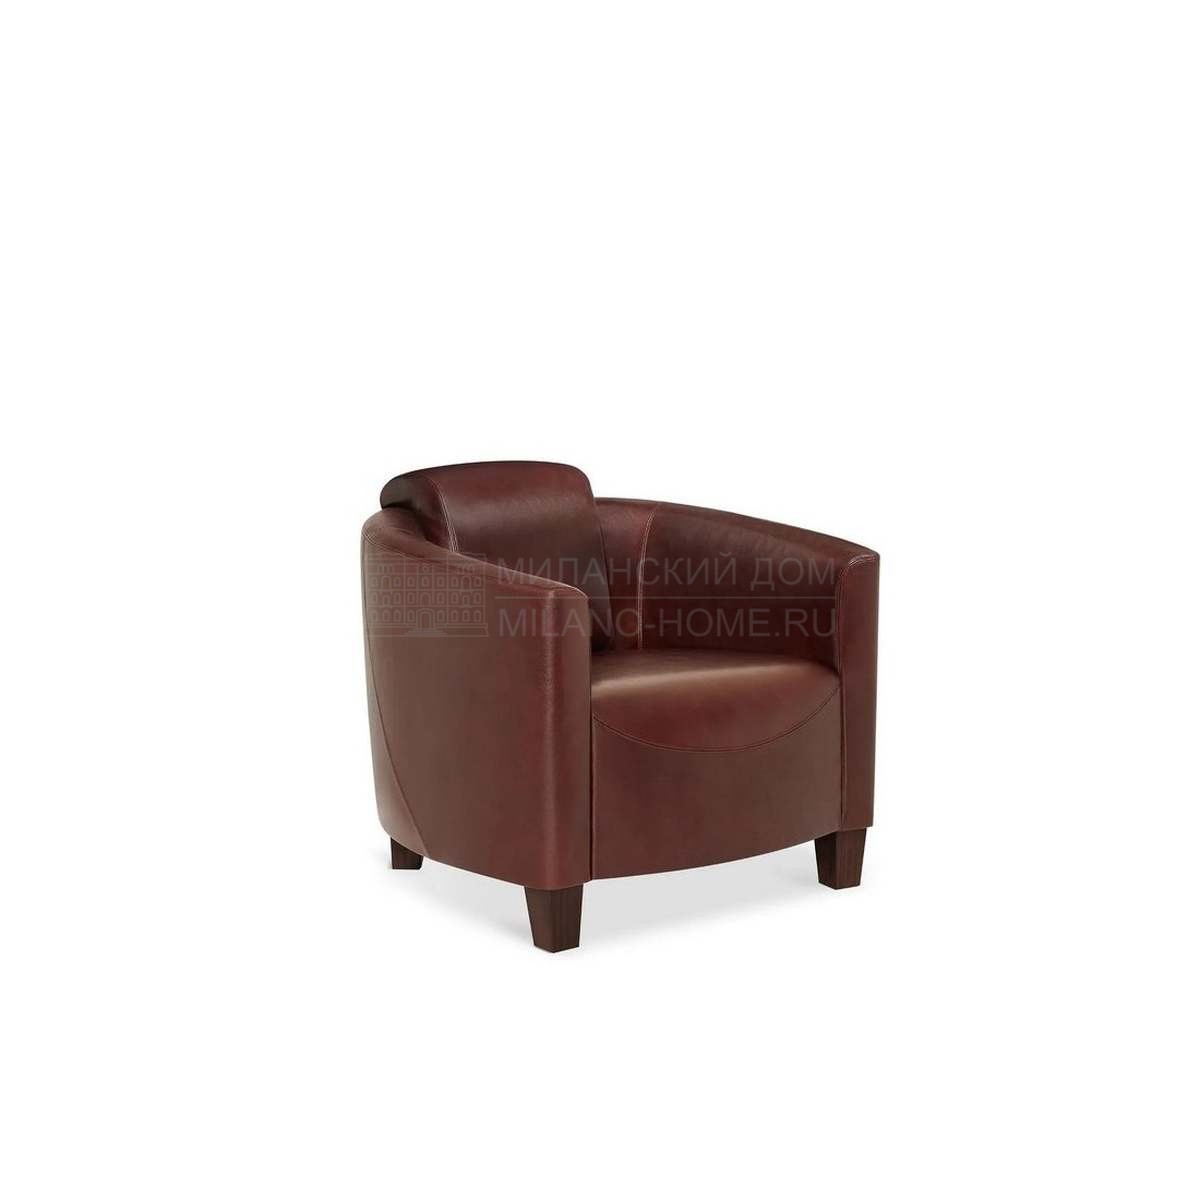 Кожаное кресло Pascal armchair leather из Италии фабрики ARMANI CASA